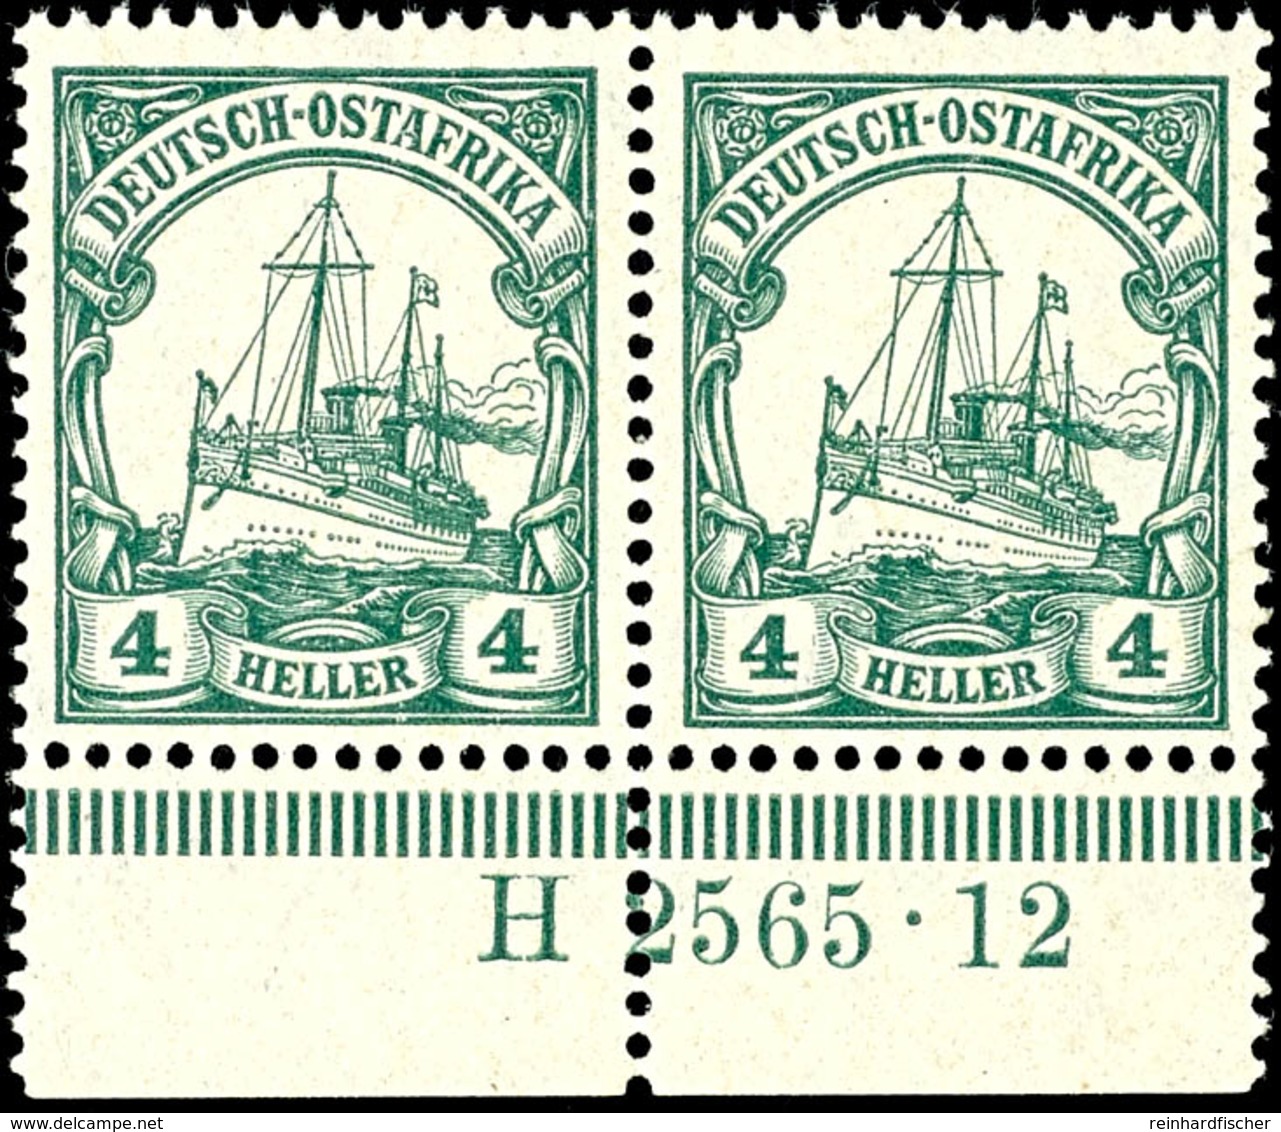 3220 4 Heller Kaiseryacht, Waagerechtes Unterrandpaar Mit HAN "H 2565.12", Tadellos Postfrisch, Mi. 90.-, Katalog: 31HAN - Deutsch-Ostafrika